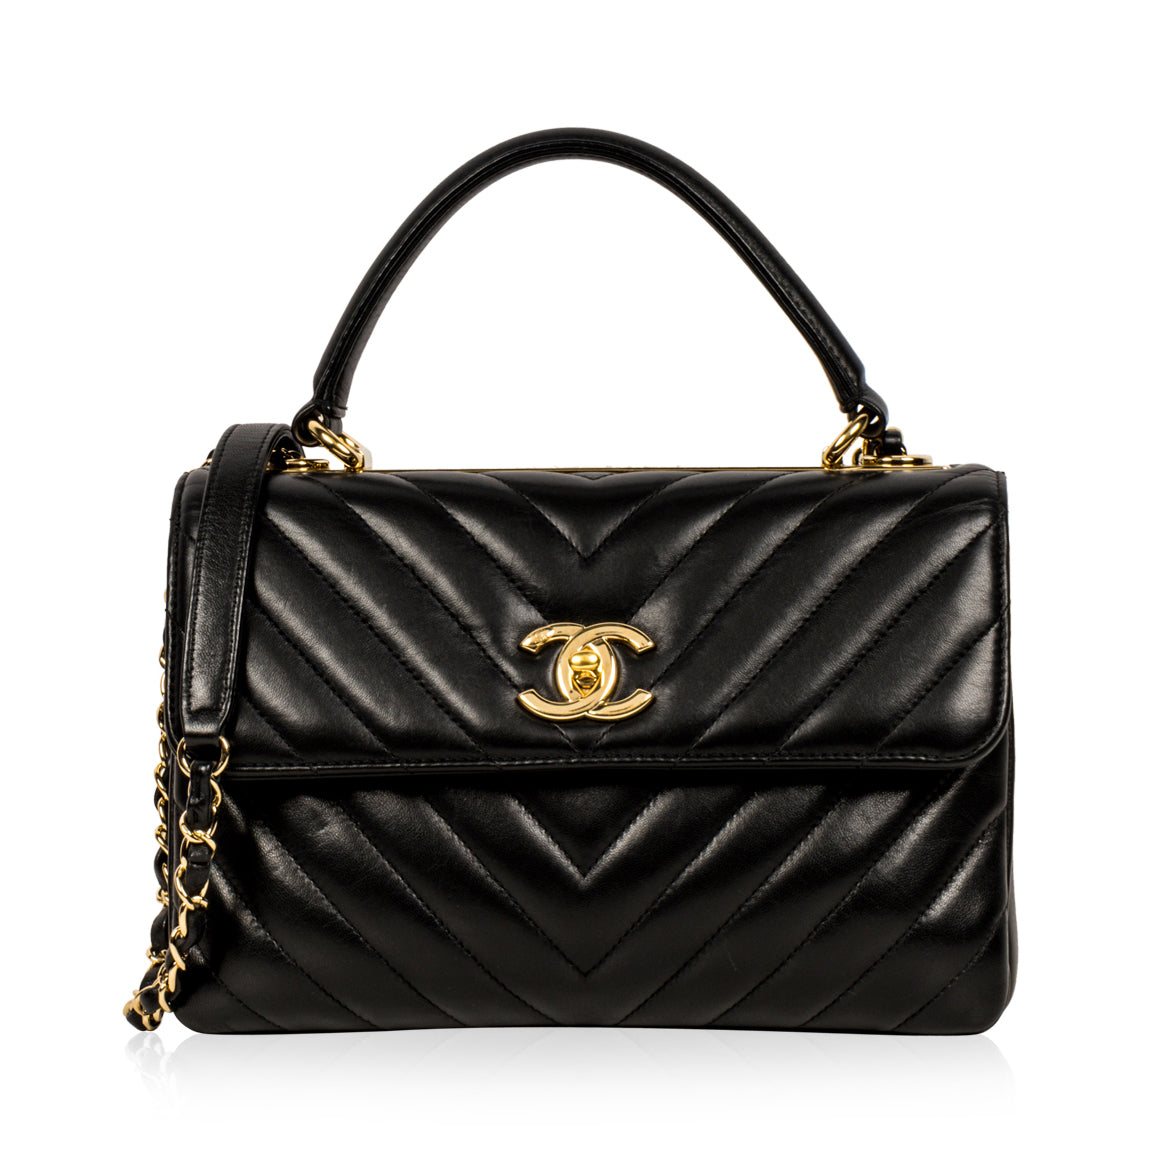 Chanel Small Trendy CC Flap Bag